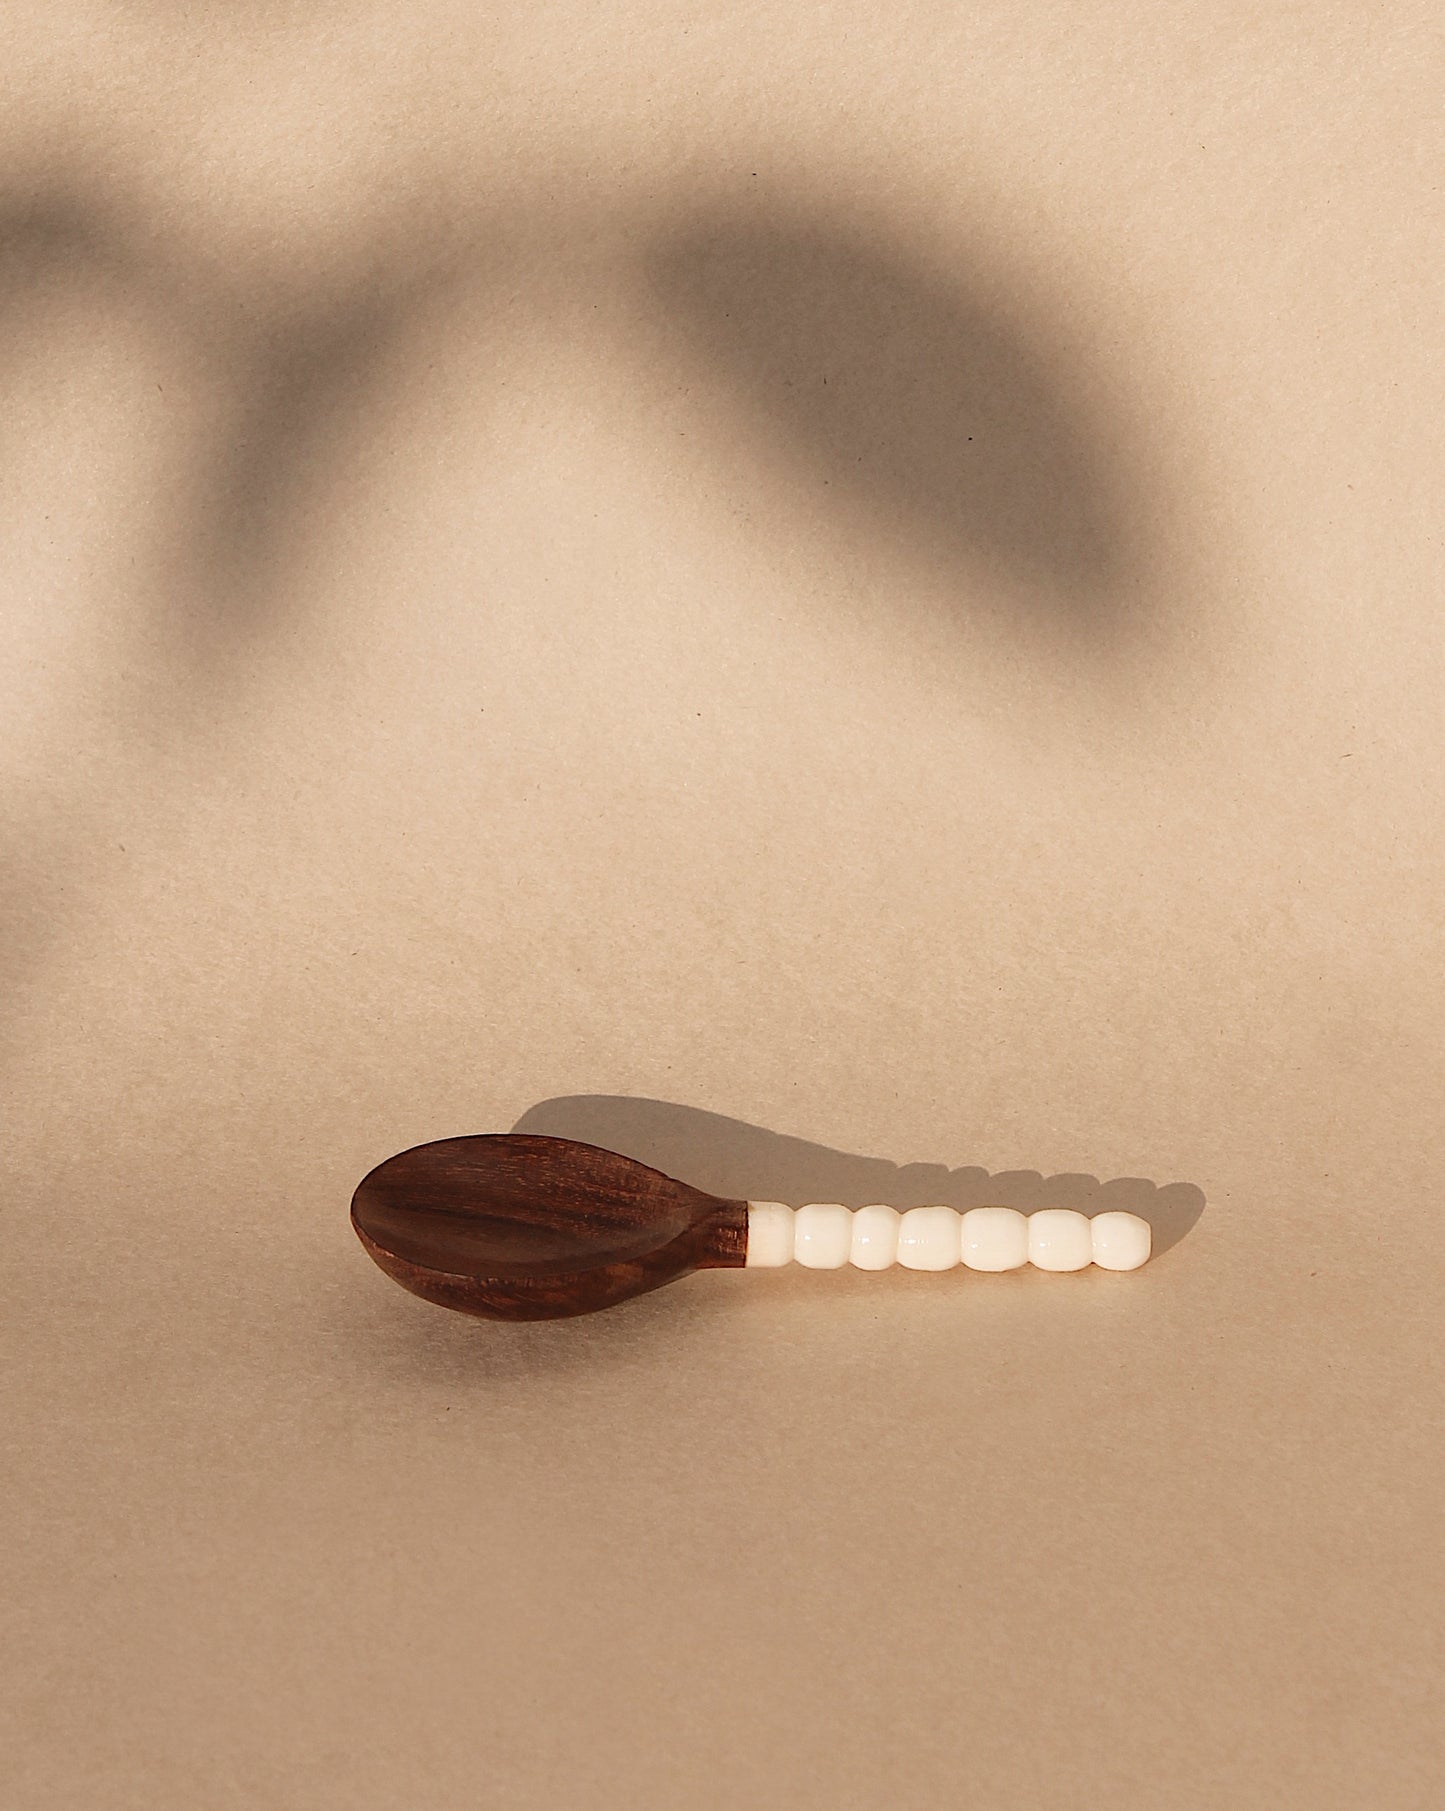 Masala Spoon in wooden texture